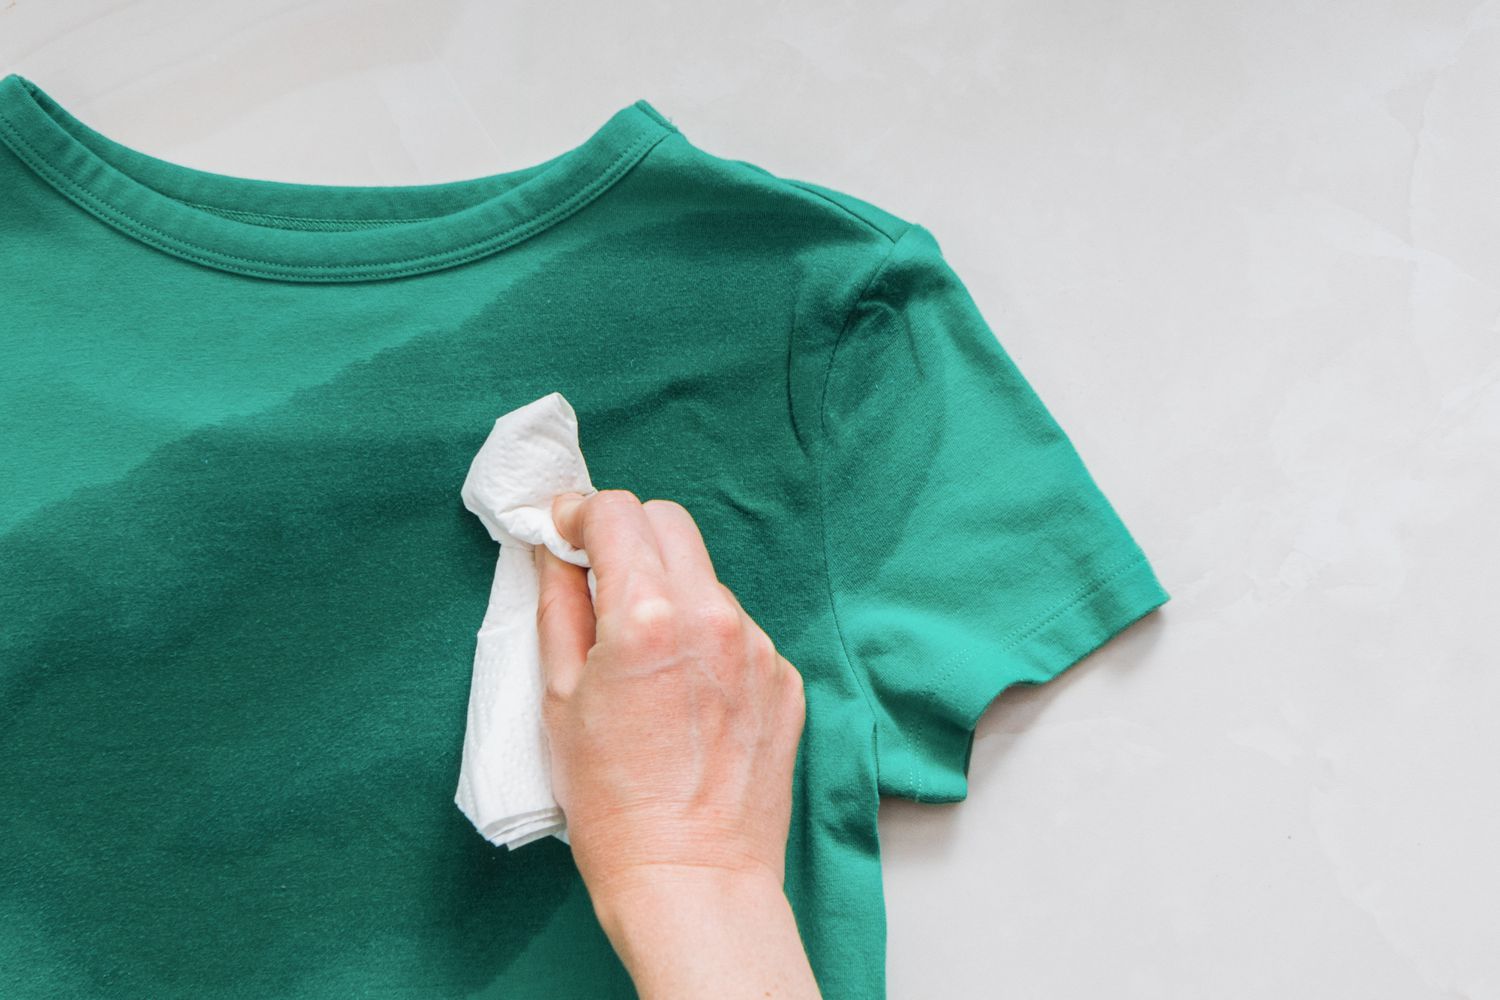 Secar la prenda manchada de refresco con toallitas de papel